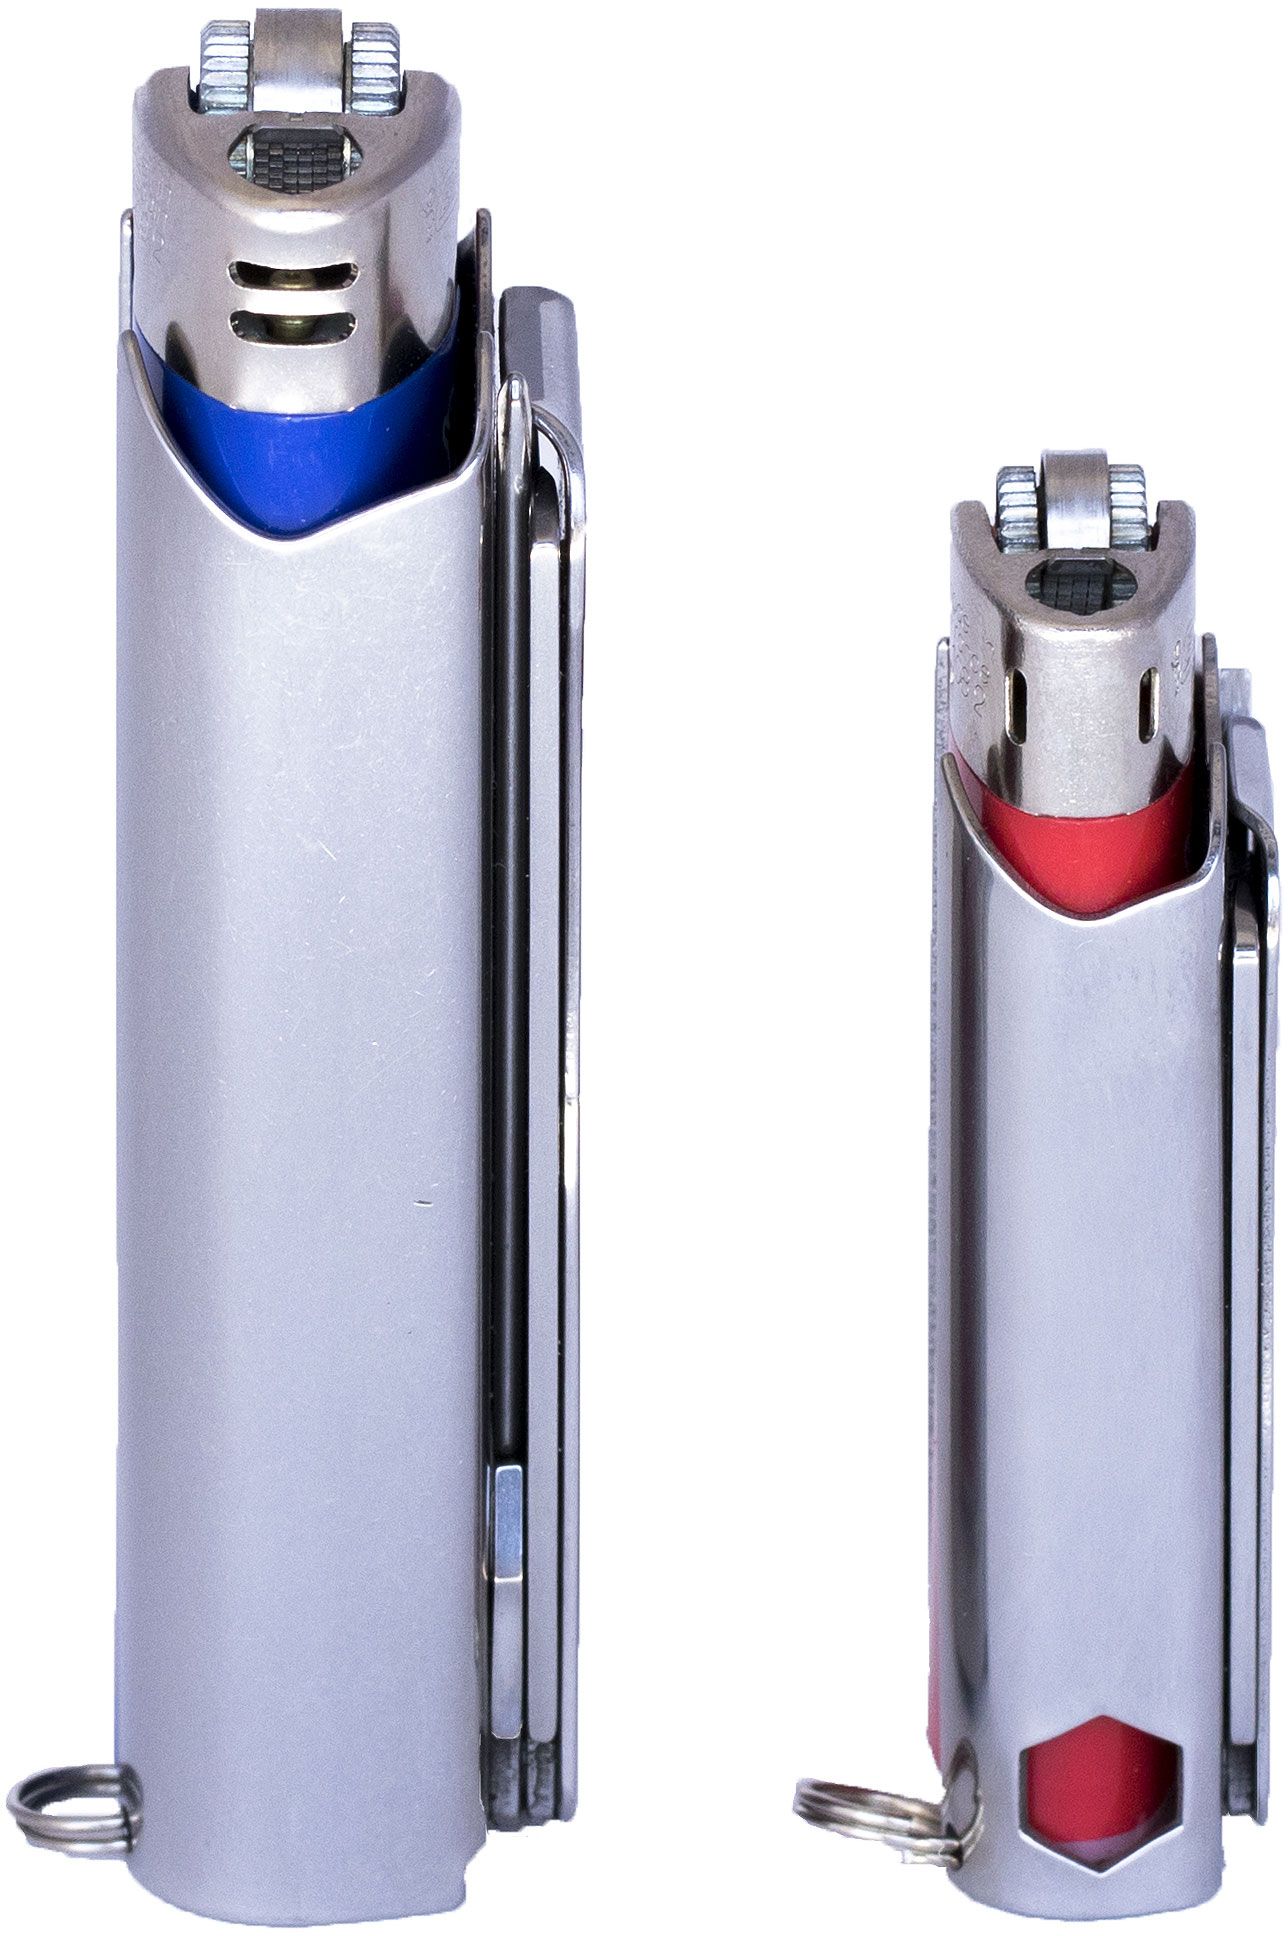 LighterBro Stainless Steel Lighter Sleeve